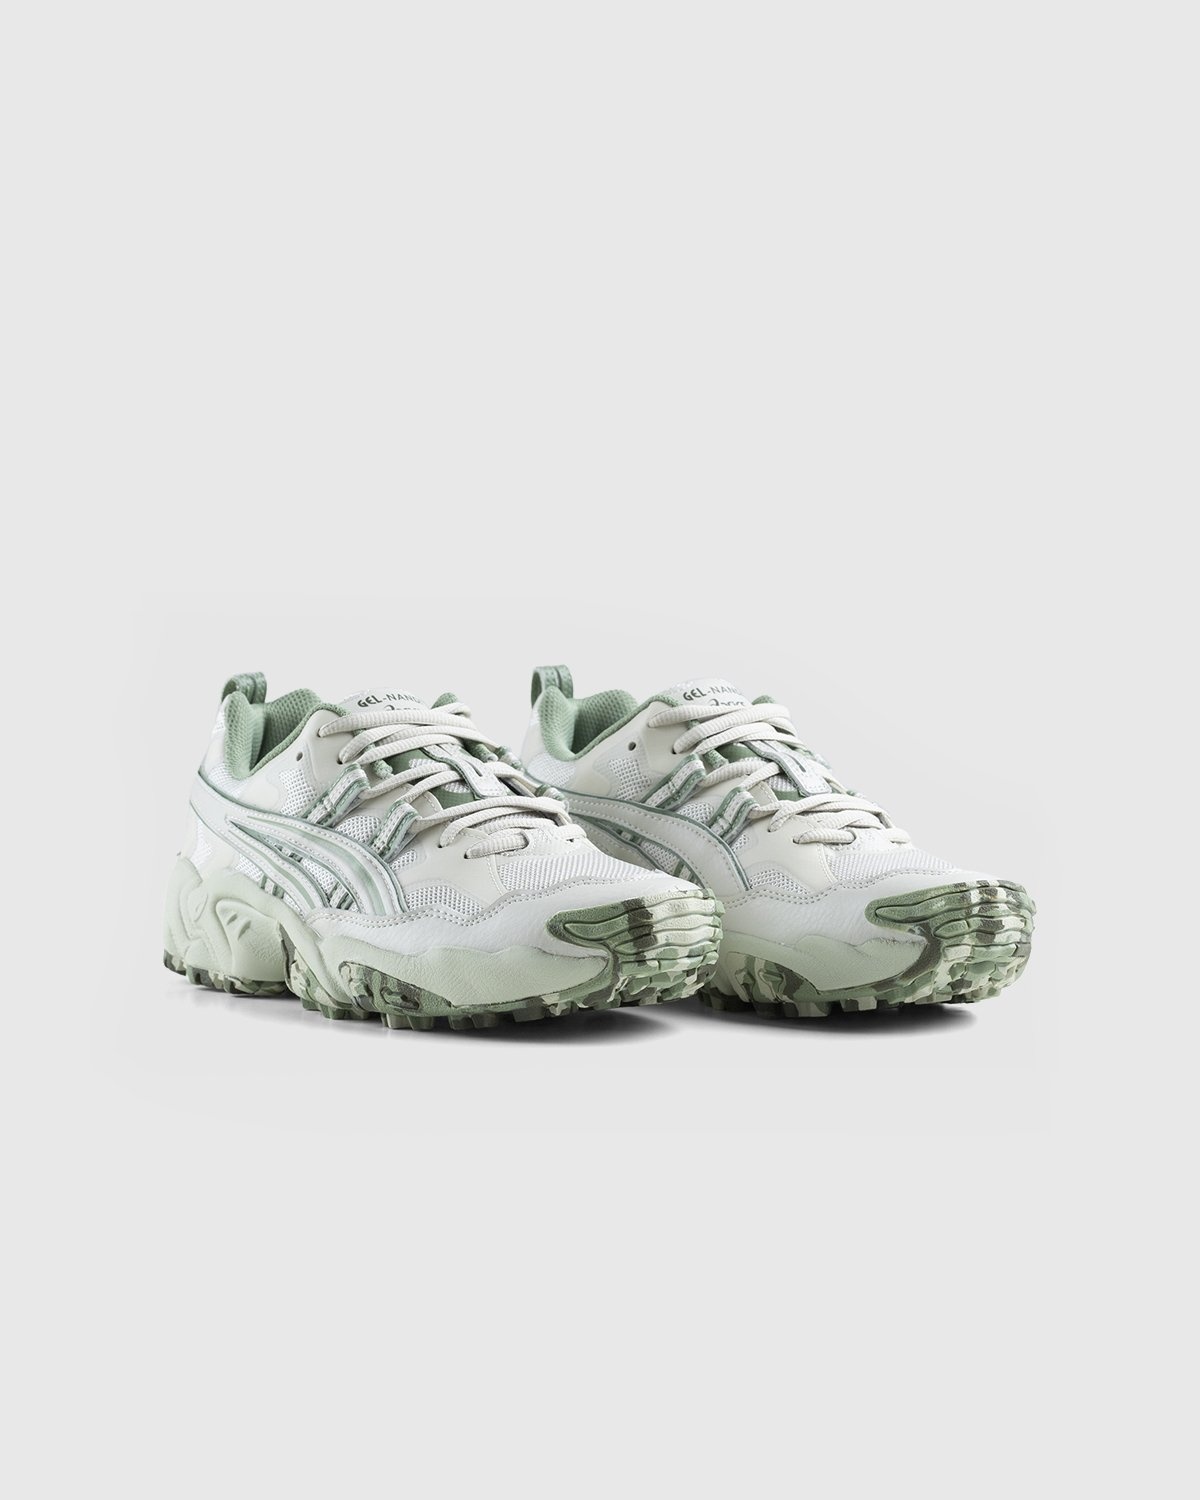 asics – Gel Nandi Smoke Grey Swamp Green - Low Top Sneakers - Grey - Image 3